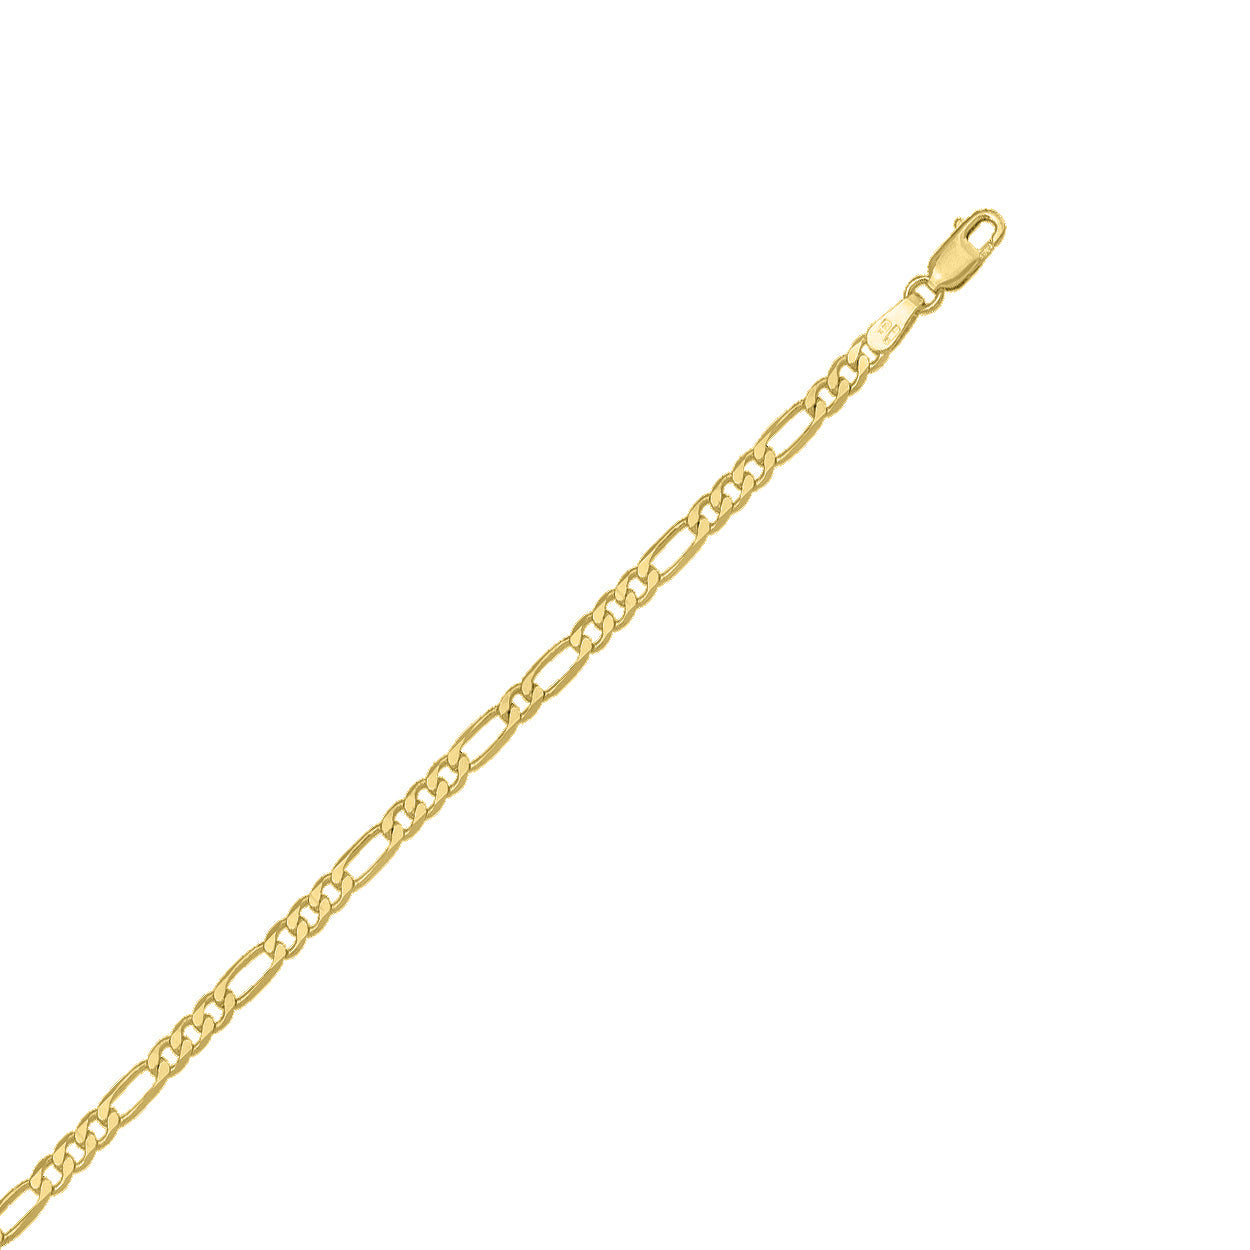 3.5mm Gold Figaro Style Bracelet